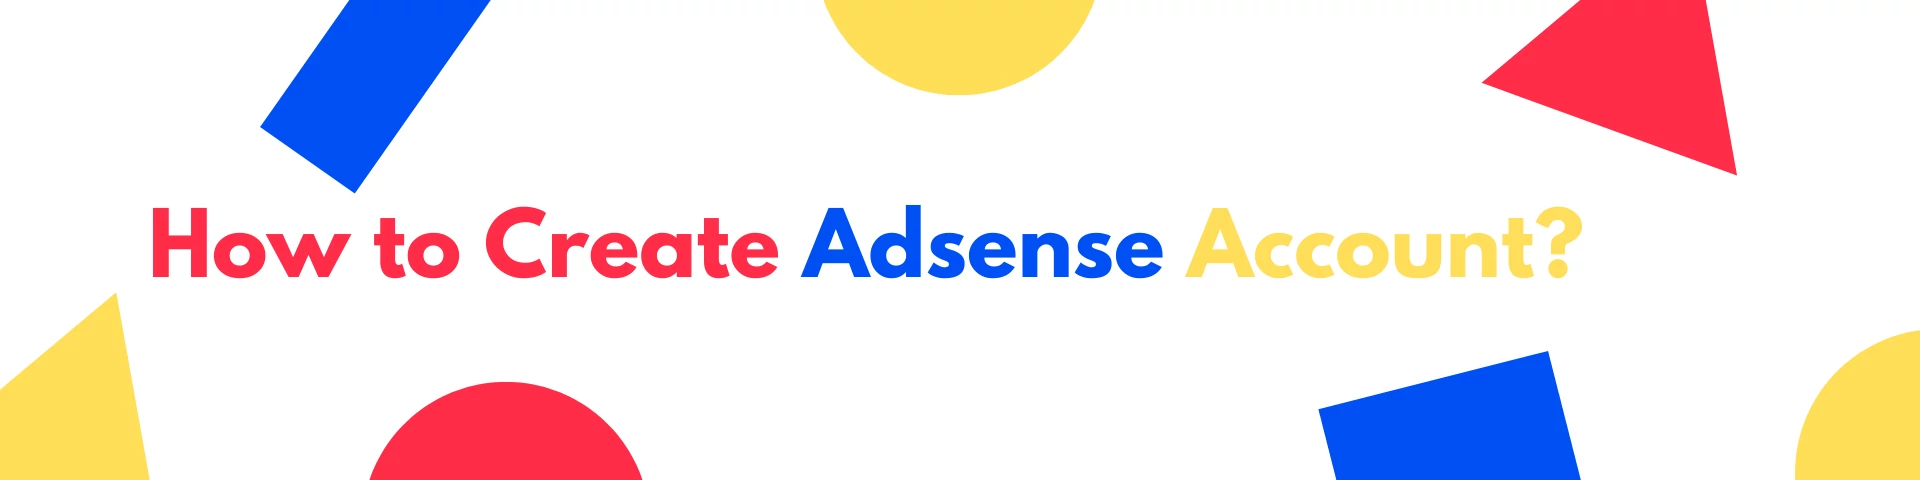 How to Create an Adsense Account?